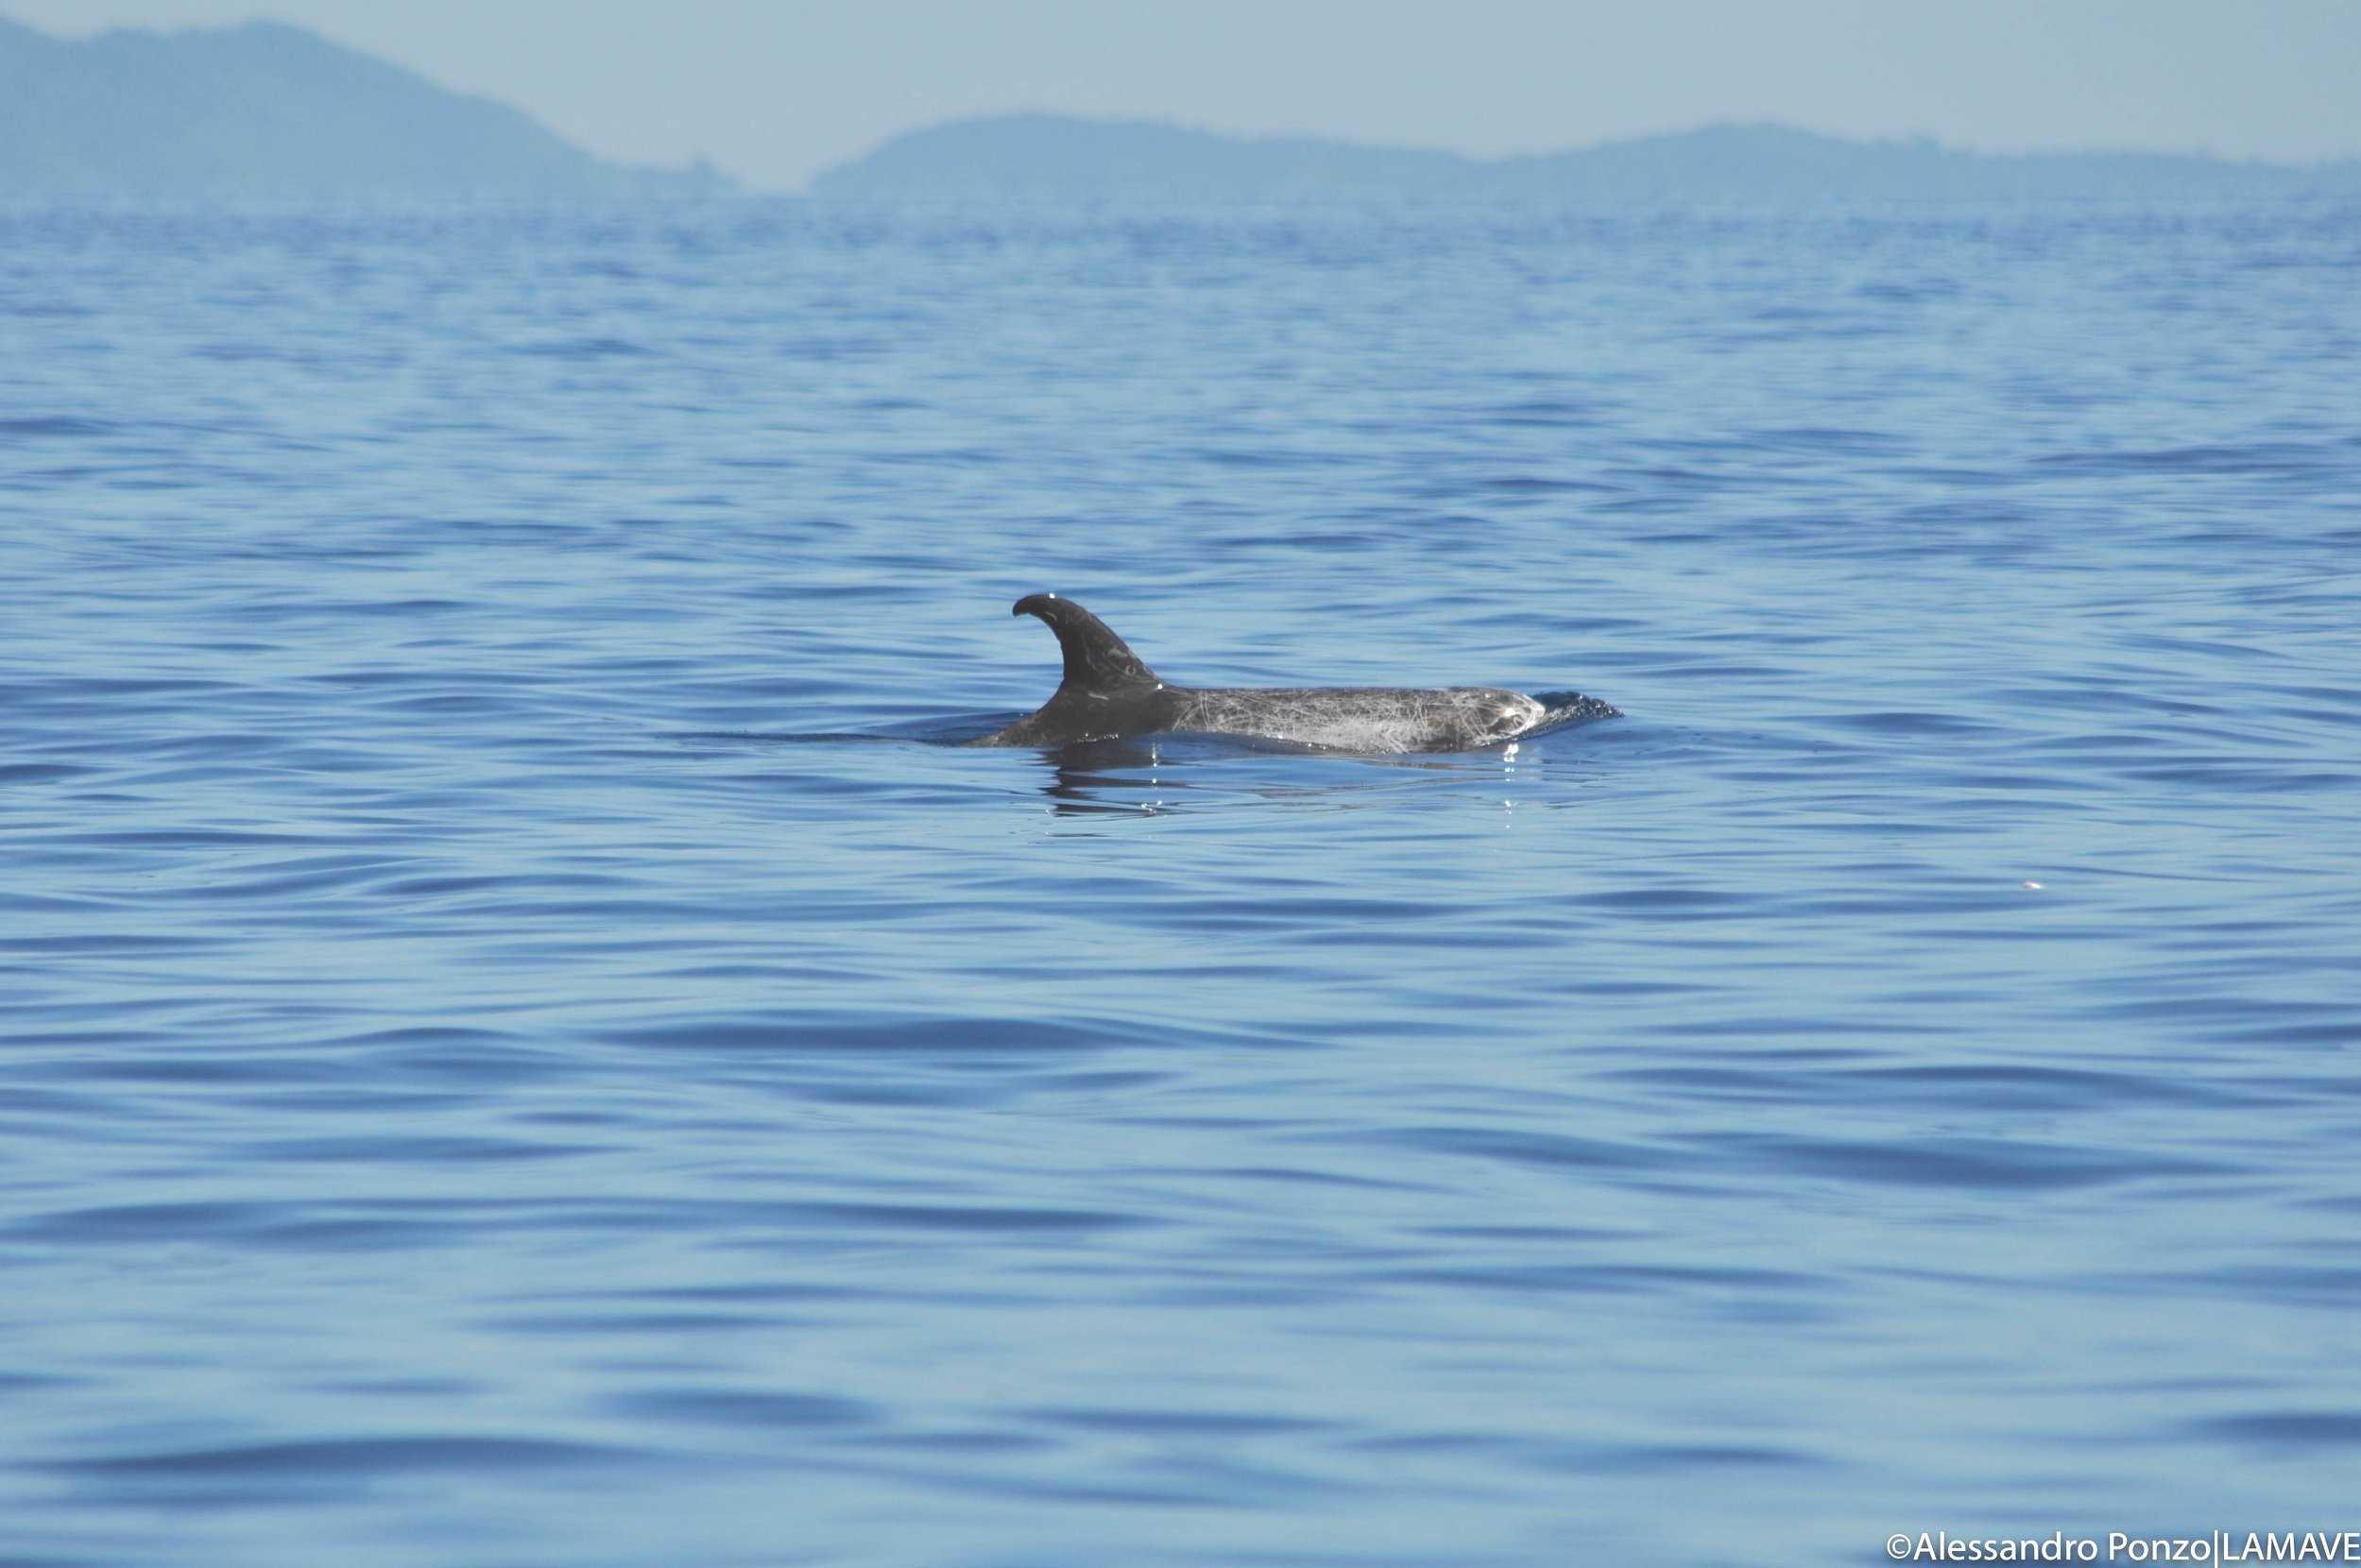 watermarked-honda-bay-september-2021-whale-shark-survey-credit-alessandro-ponzo-lamave-0290.jpg